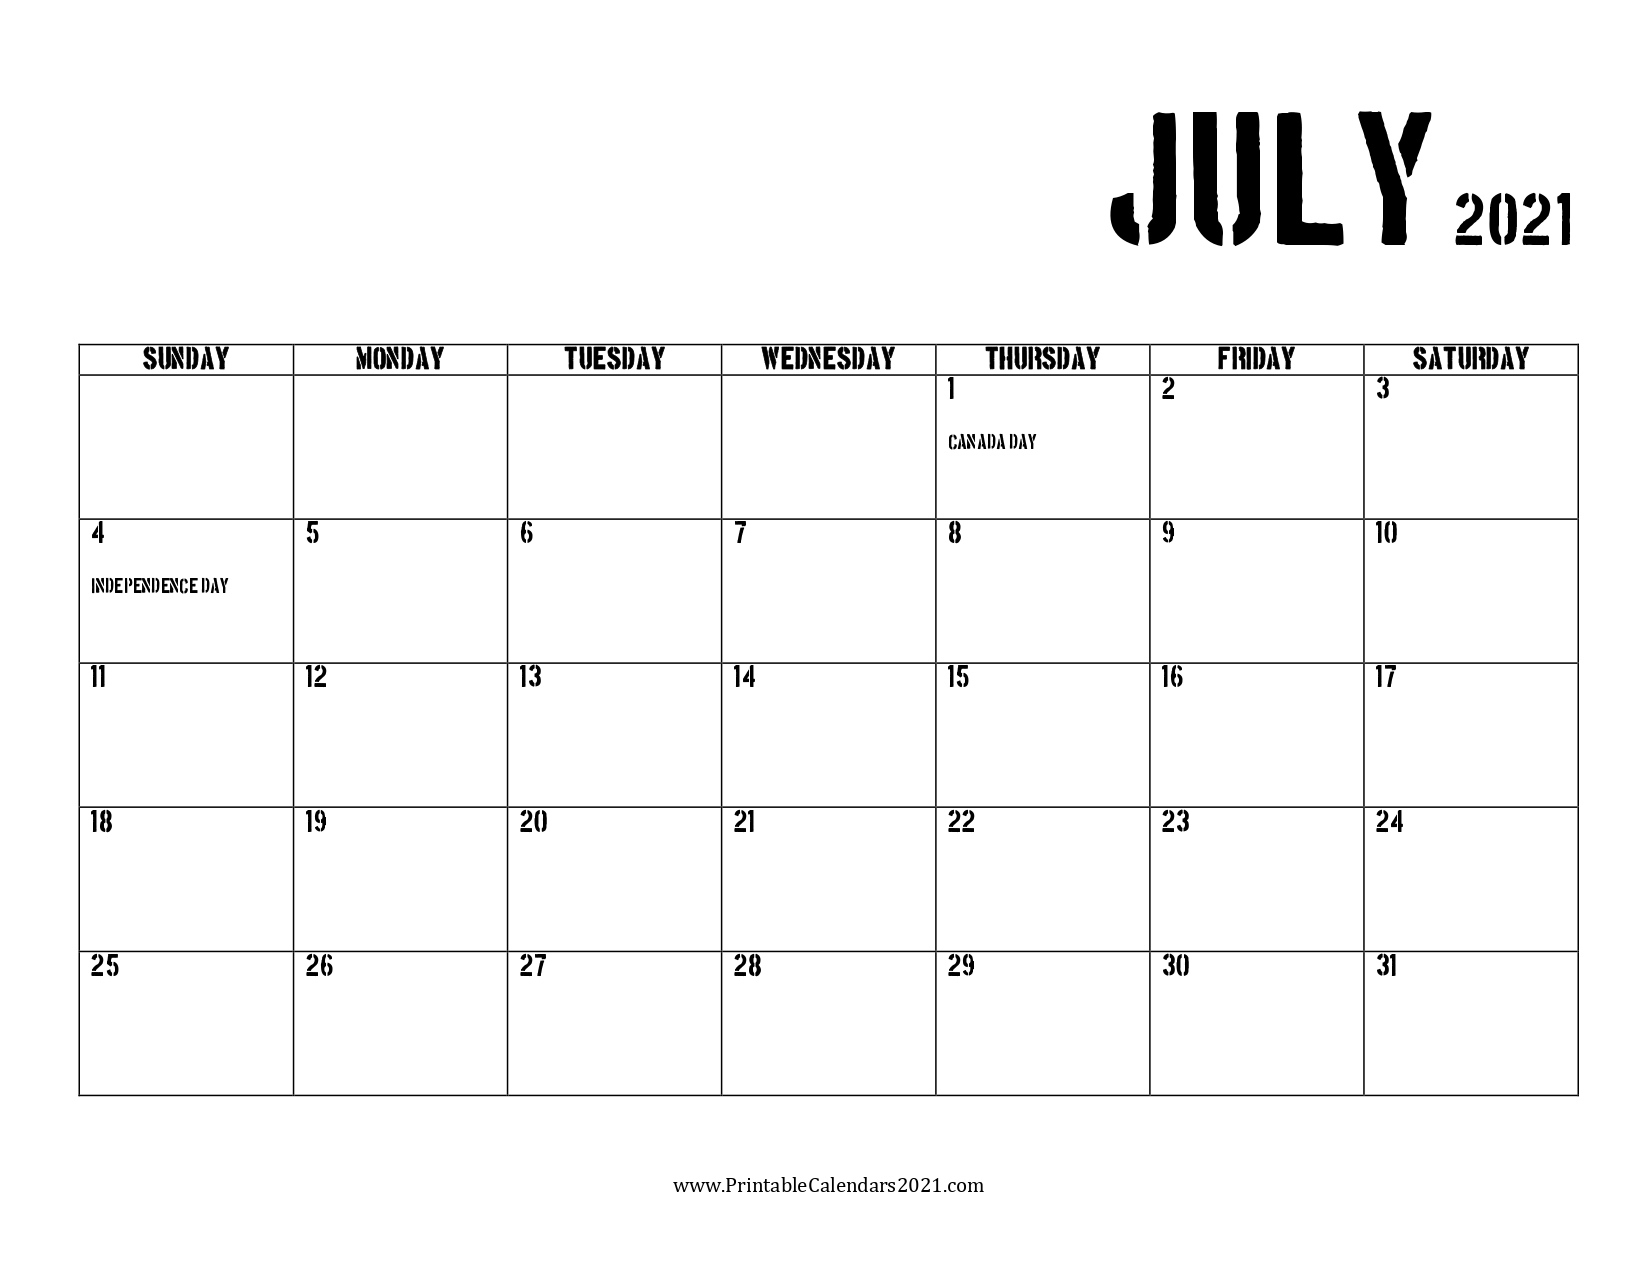 45+ July 2021 Calendar Printable, July 2021 Calendar Pdf, Blank, Free Picture Of July 2021 Calendar